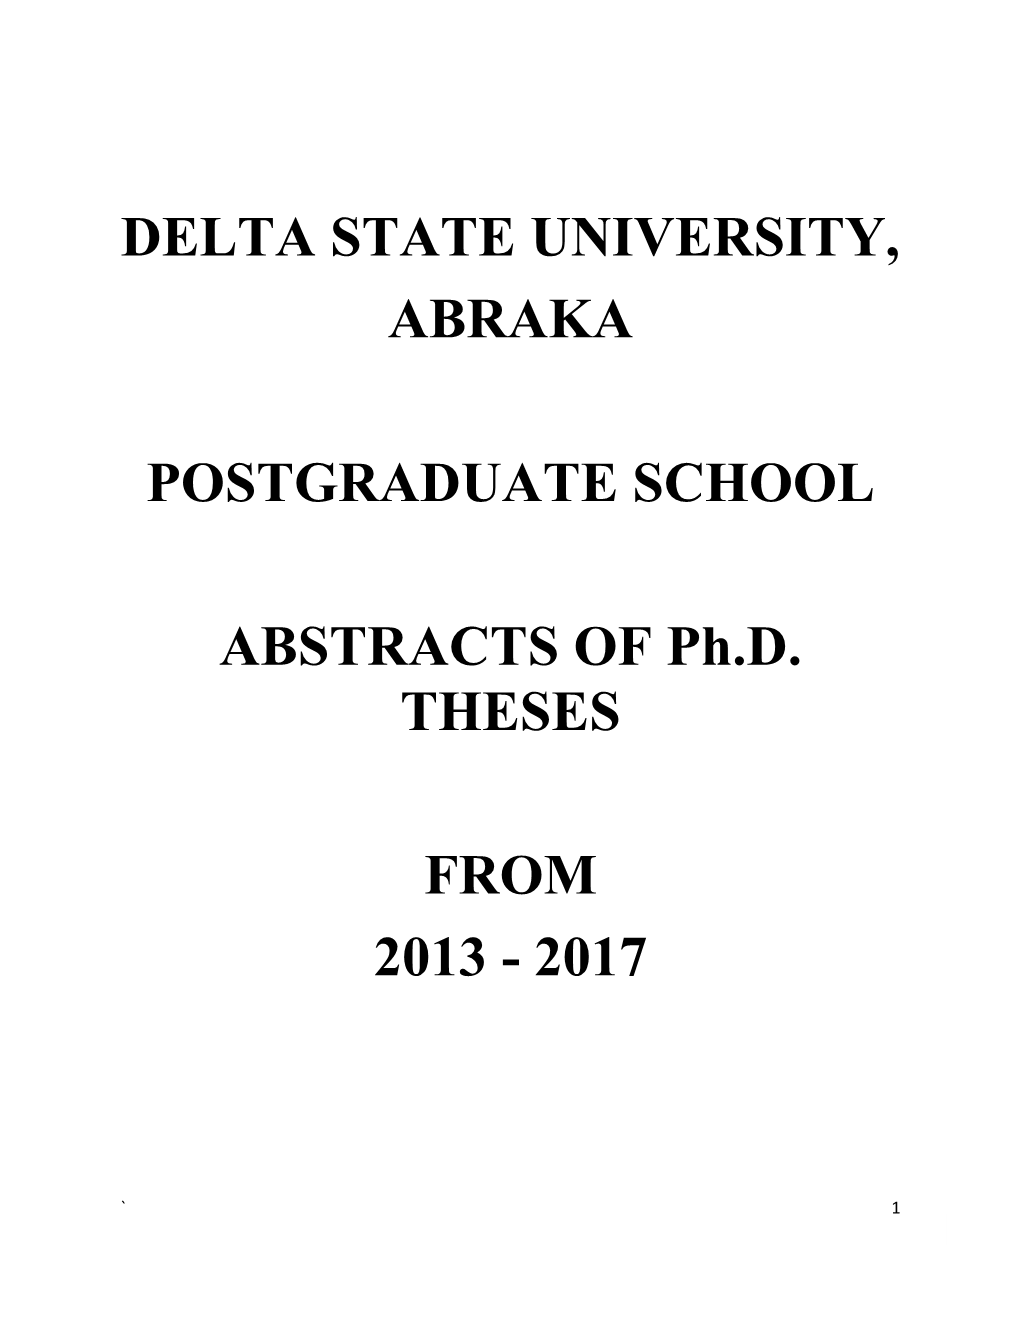 Postgradute School Abstract of Ph.D